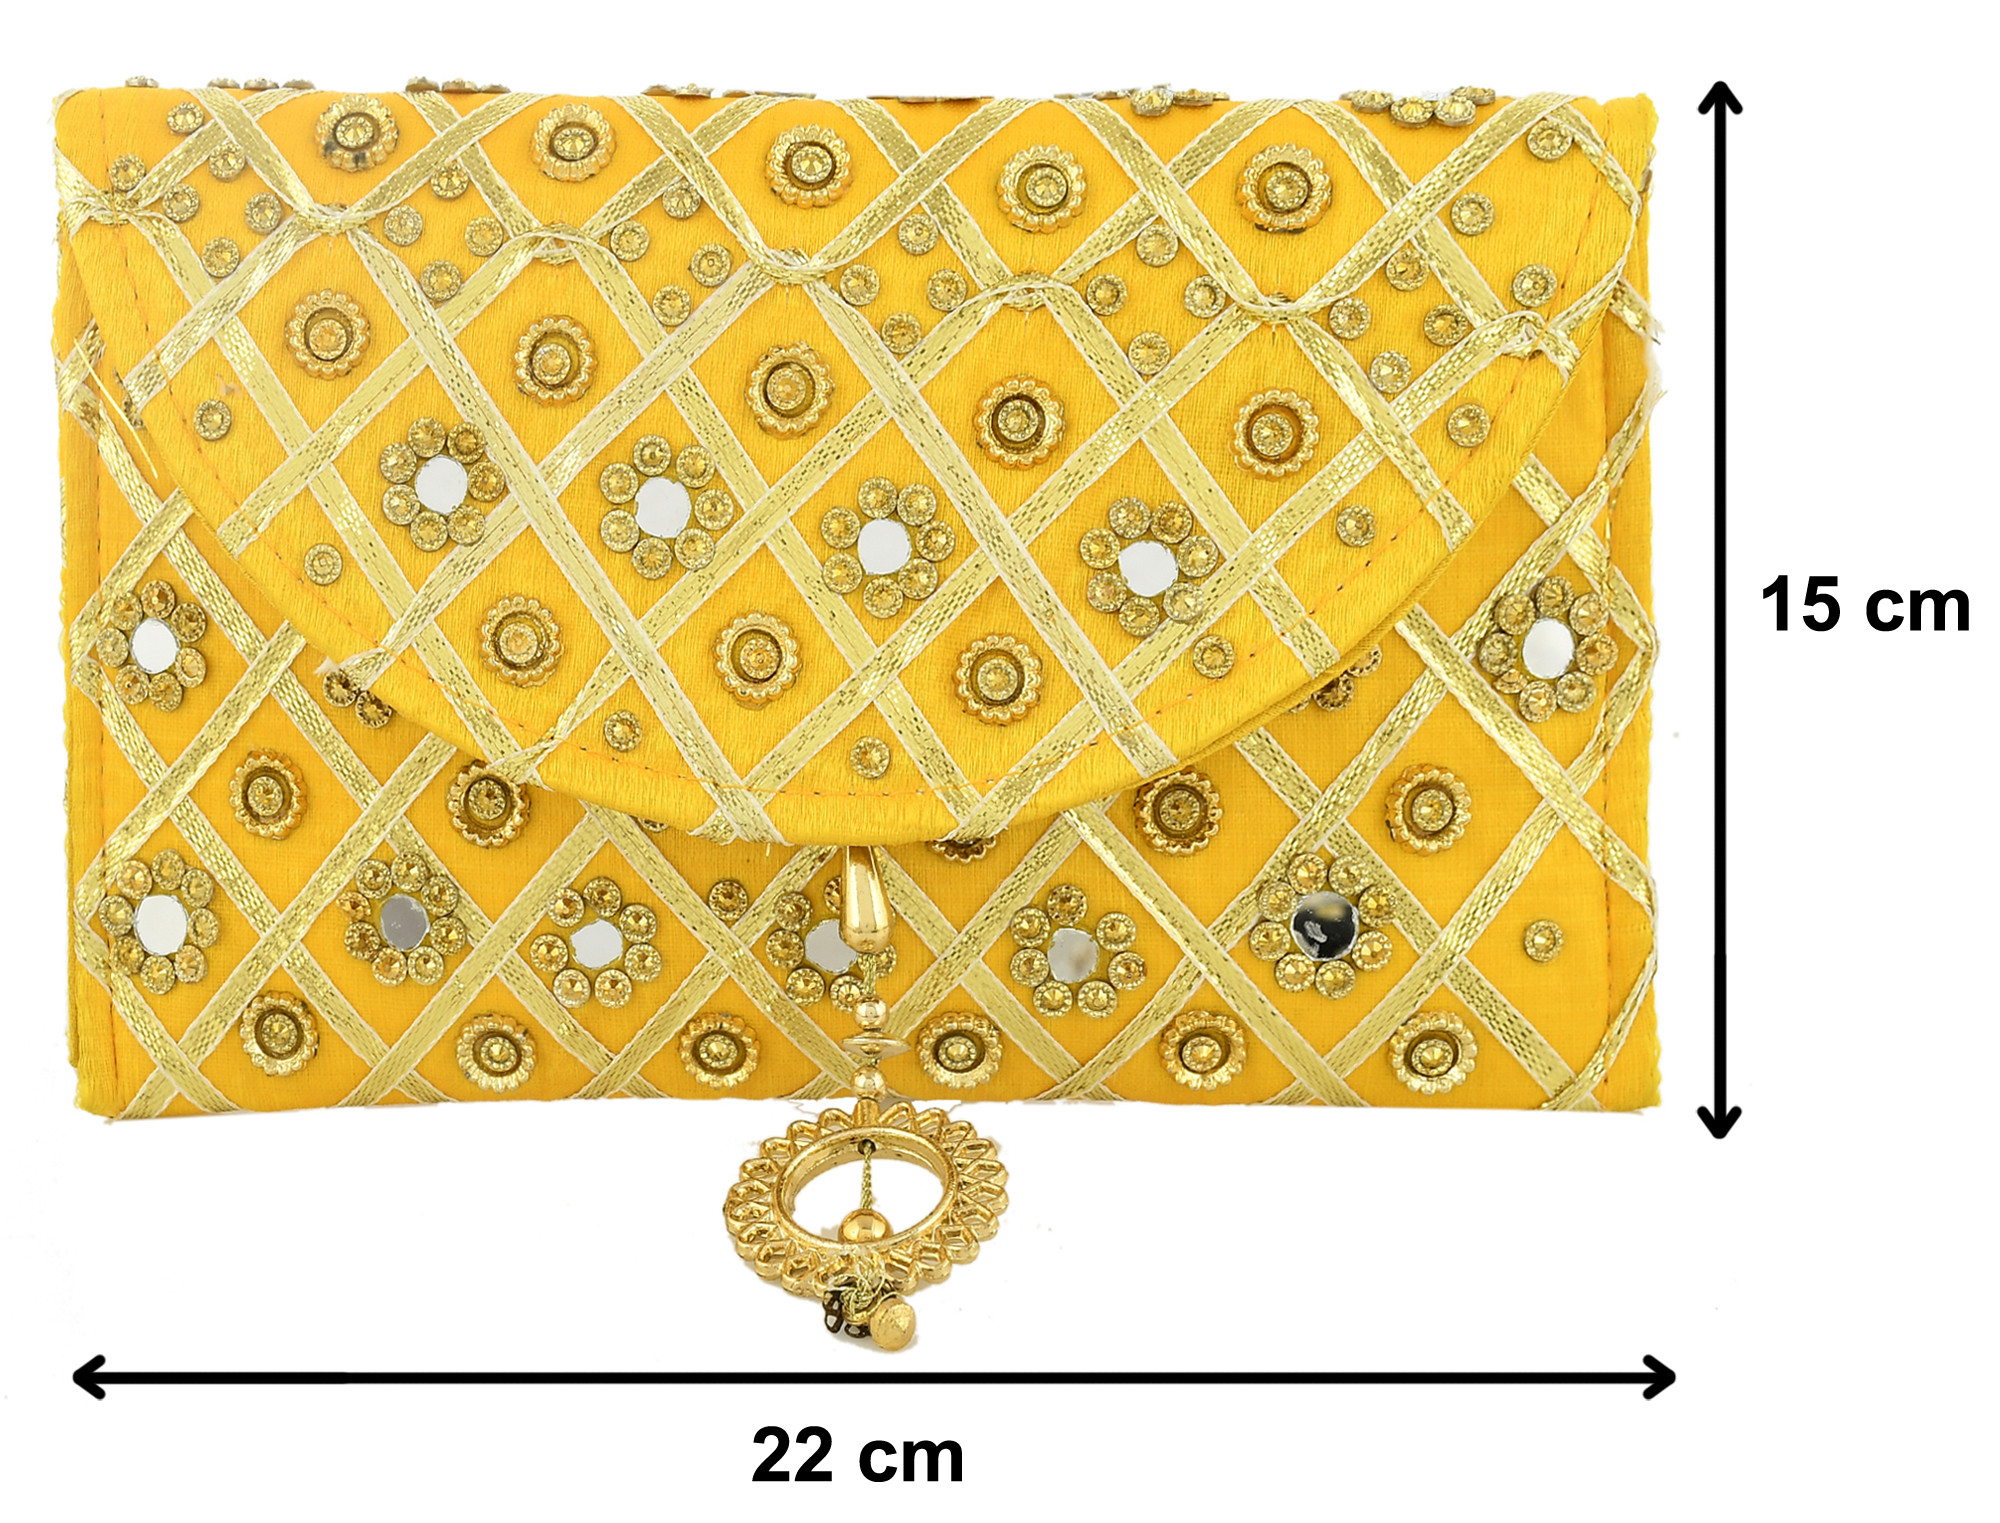 Kuber Industries Silk Traditional Mirror Work Envelope Clutch/Hand Purse Bag For Women/Girls (Gold)-KUBMRT11451